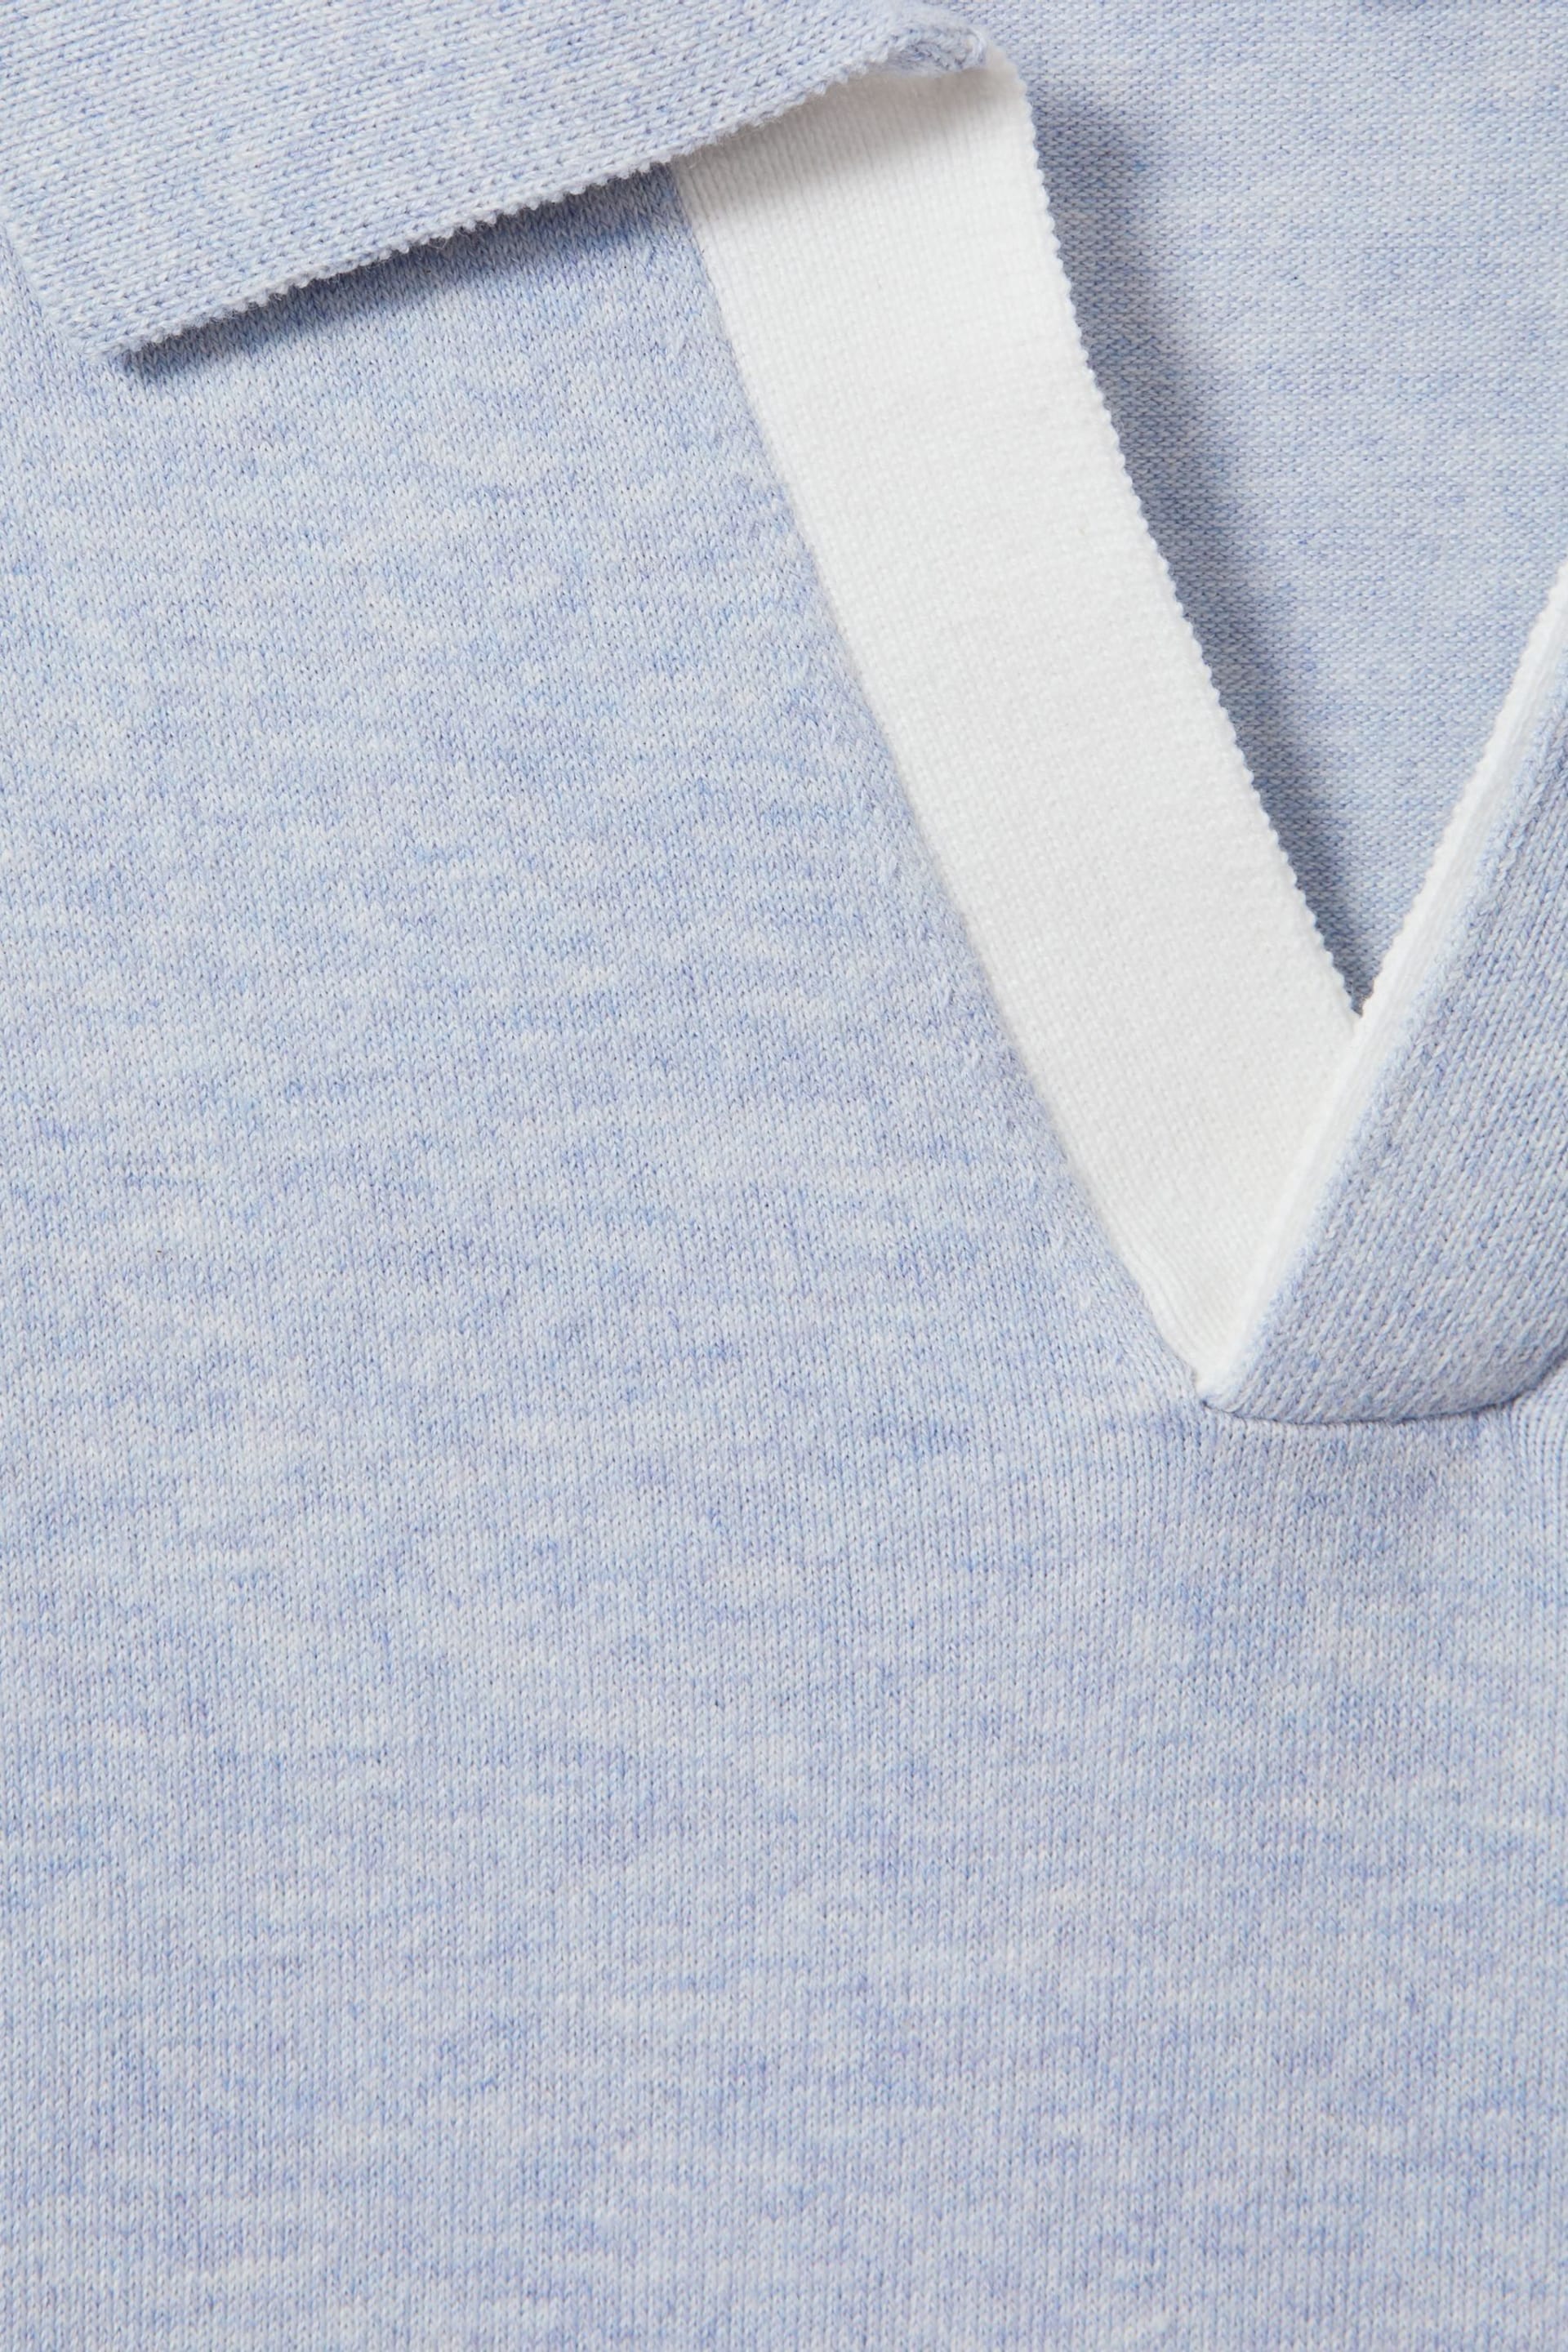 Reiss Soft Blue Boston Cotton Blend Contrast Open Collar Shirt - Image 6 of 6